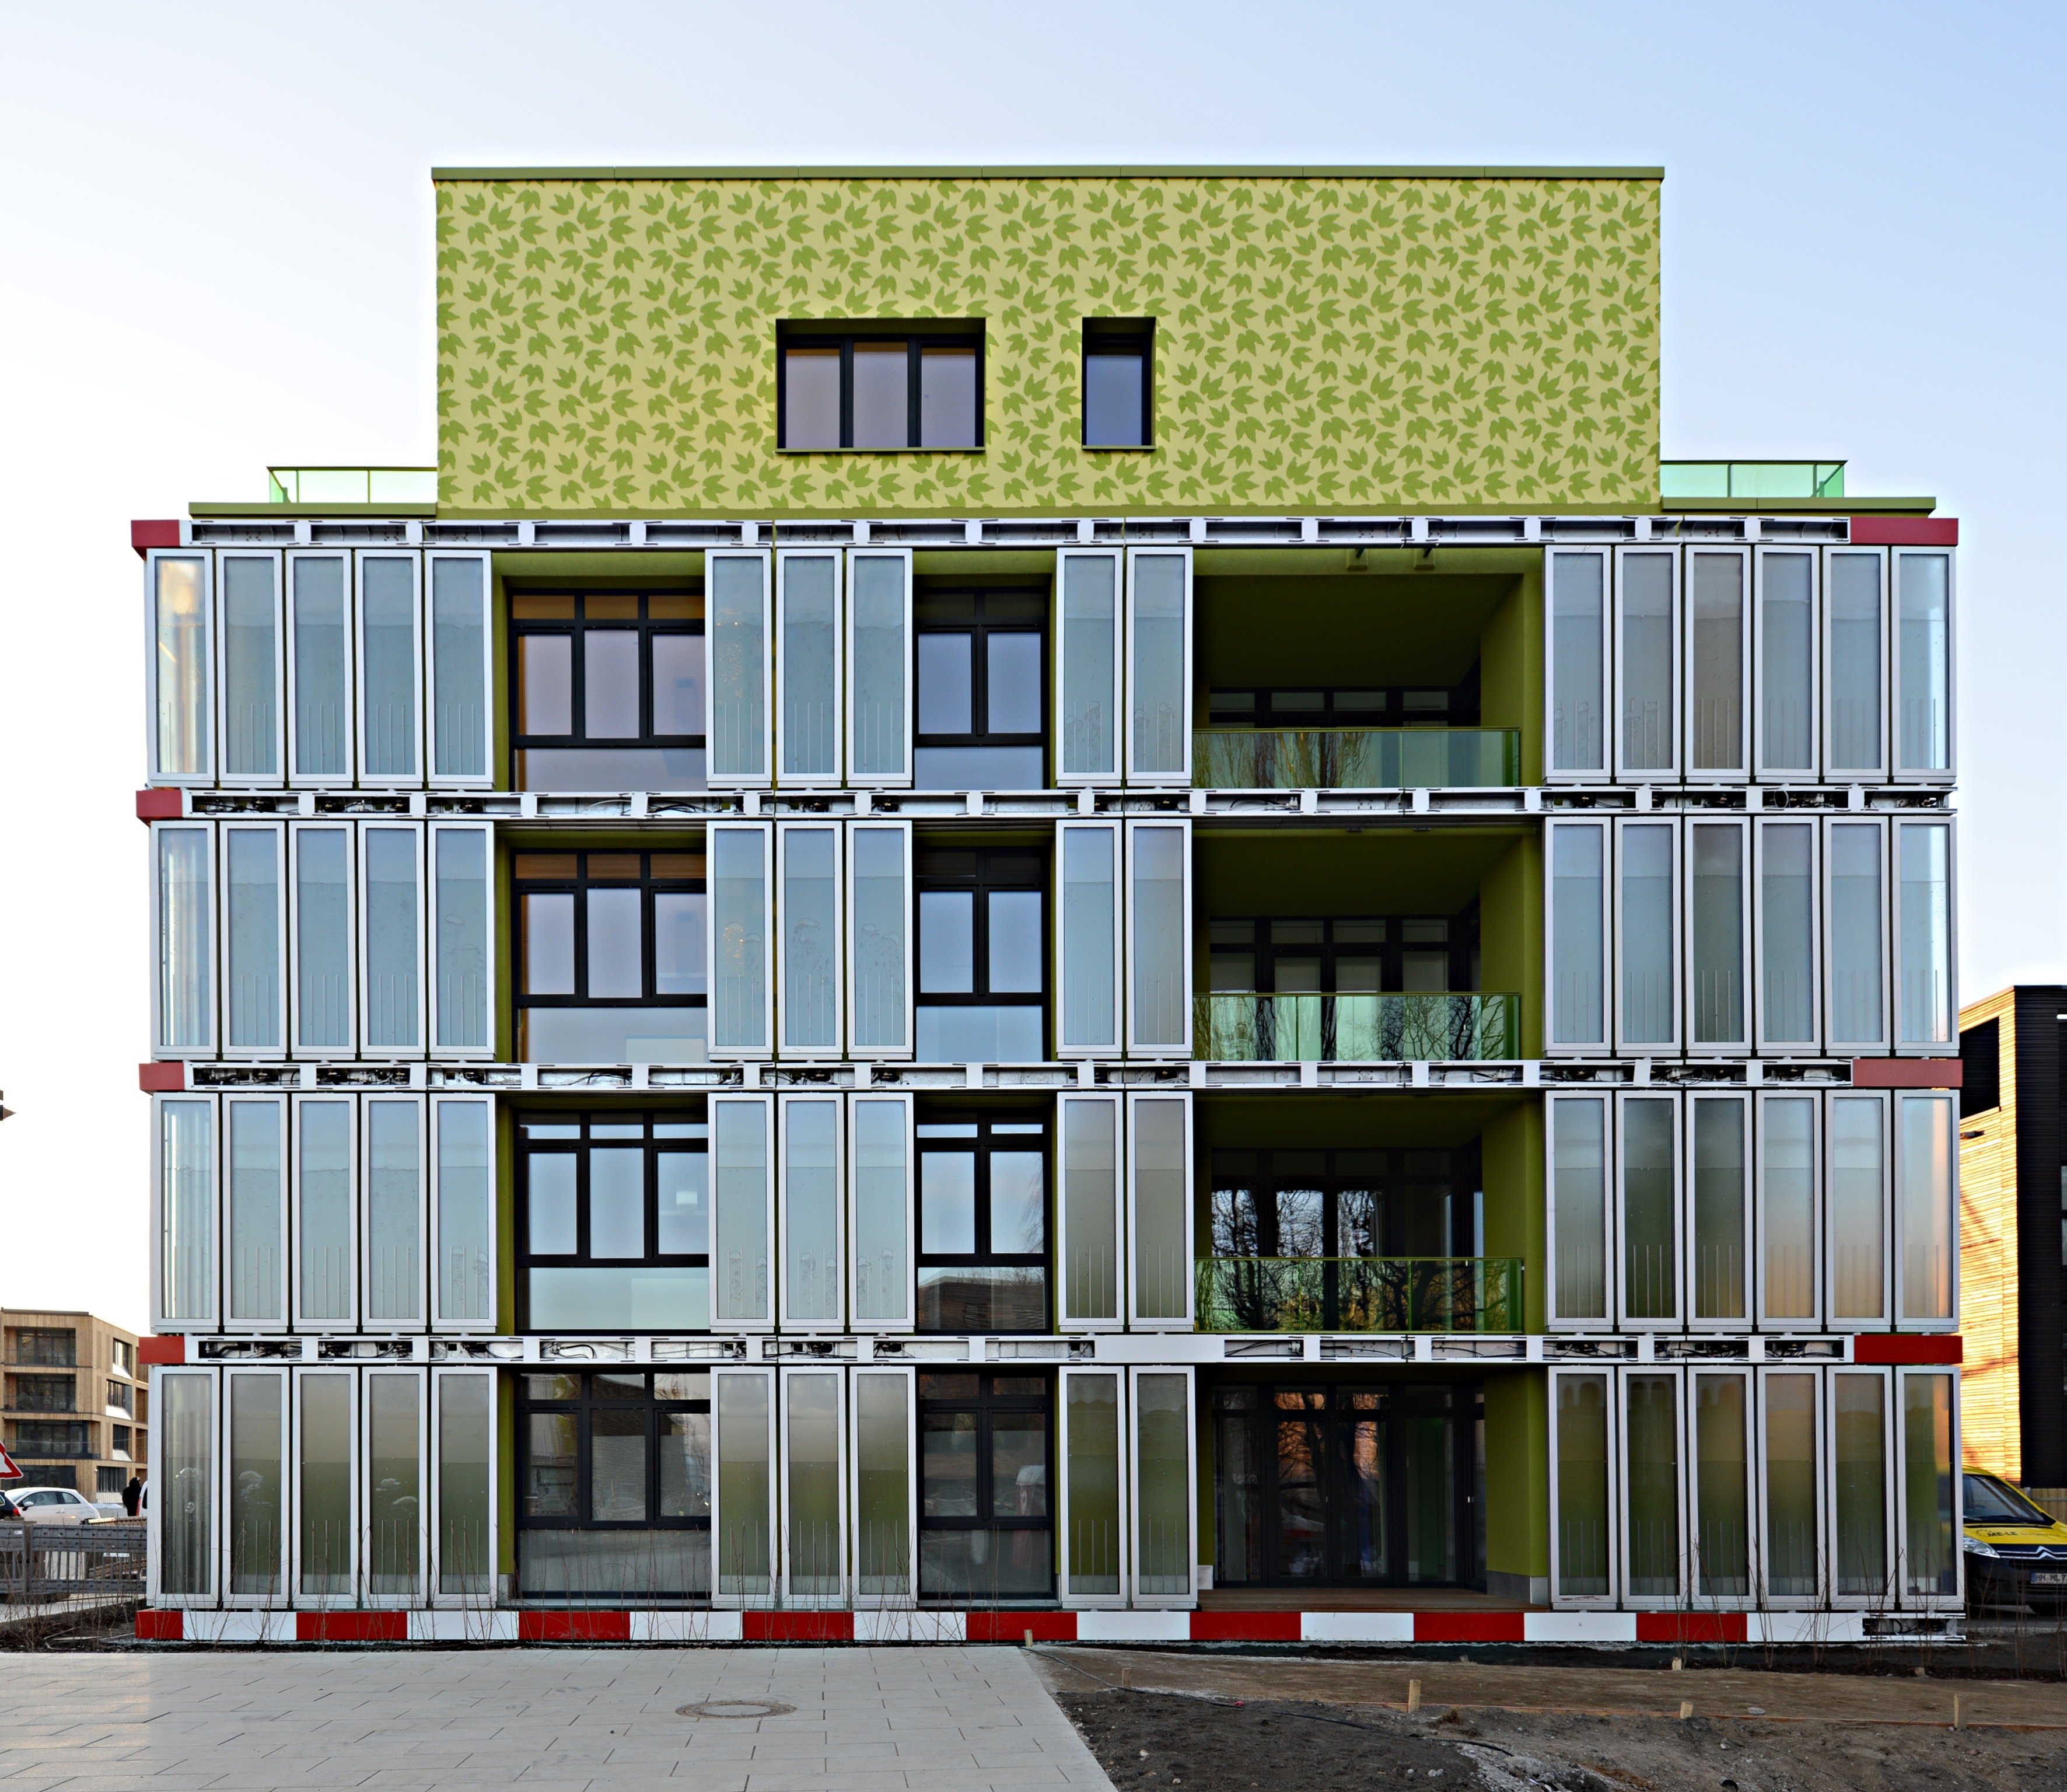 Bi q. "Дом из водорослей", Гамбург, Германия. "Дом из водорослей", Гамбург, Германия 2023. Дом из водорослей в Гамбурге. Здания biq House.